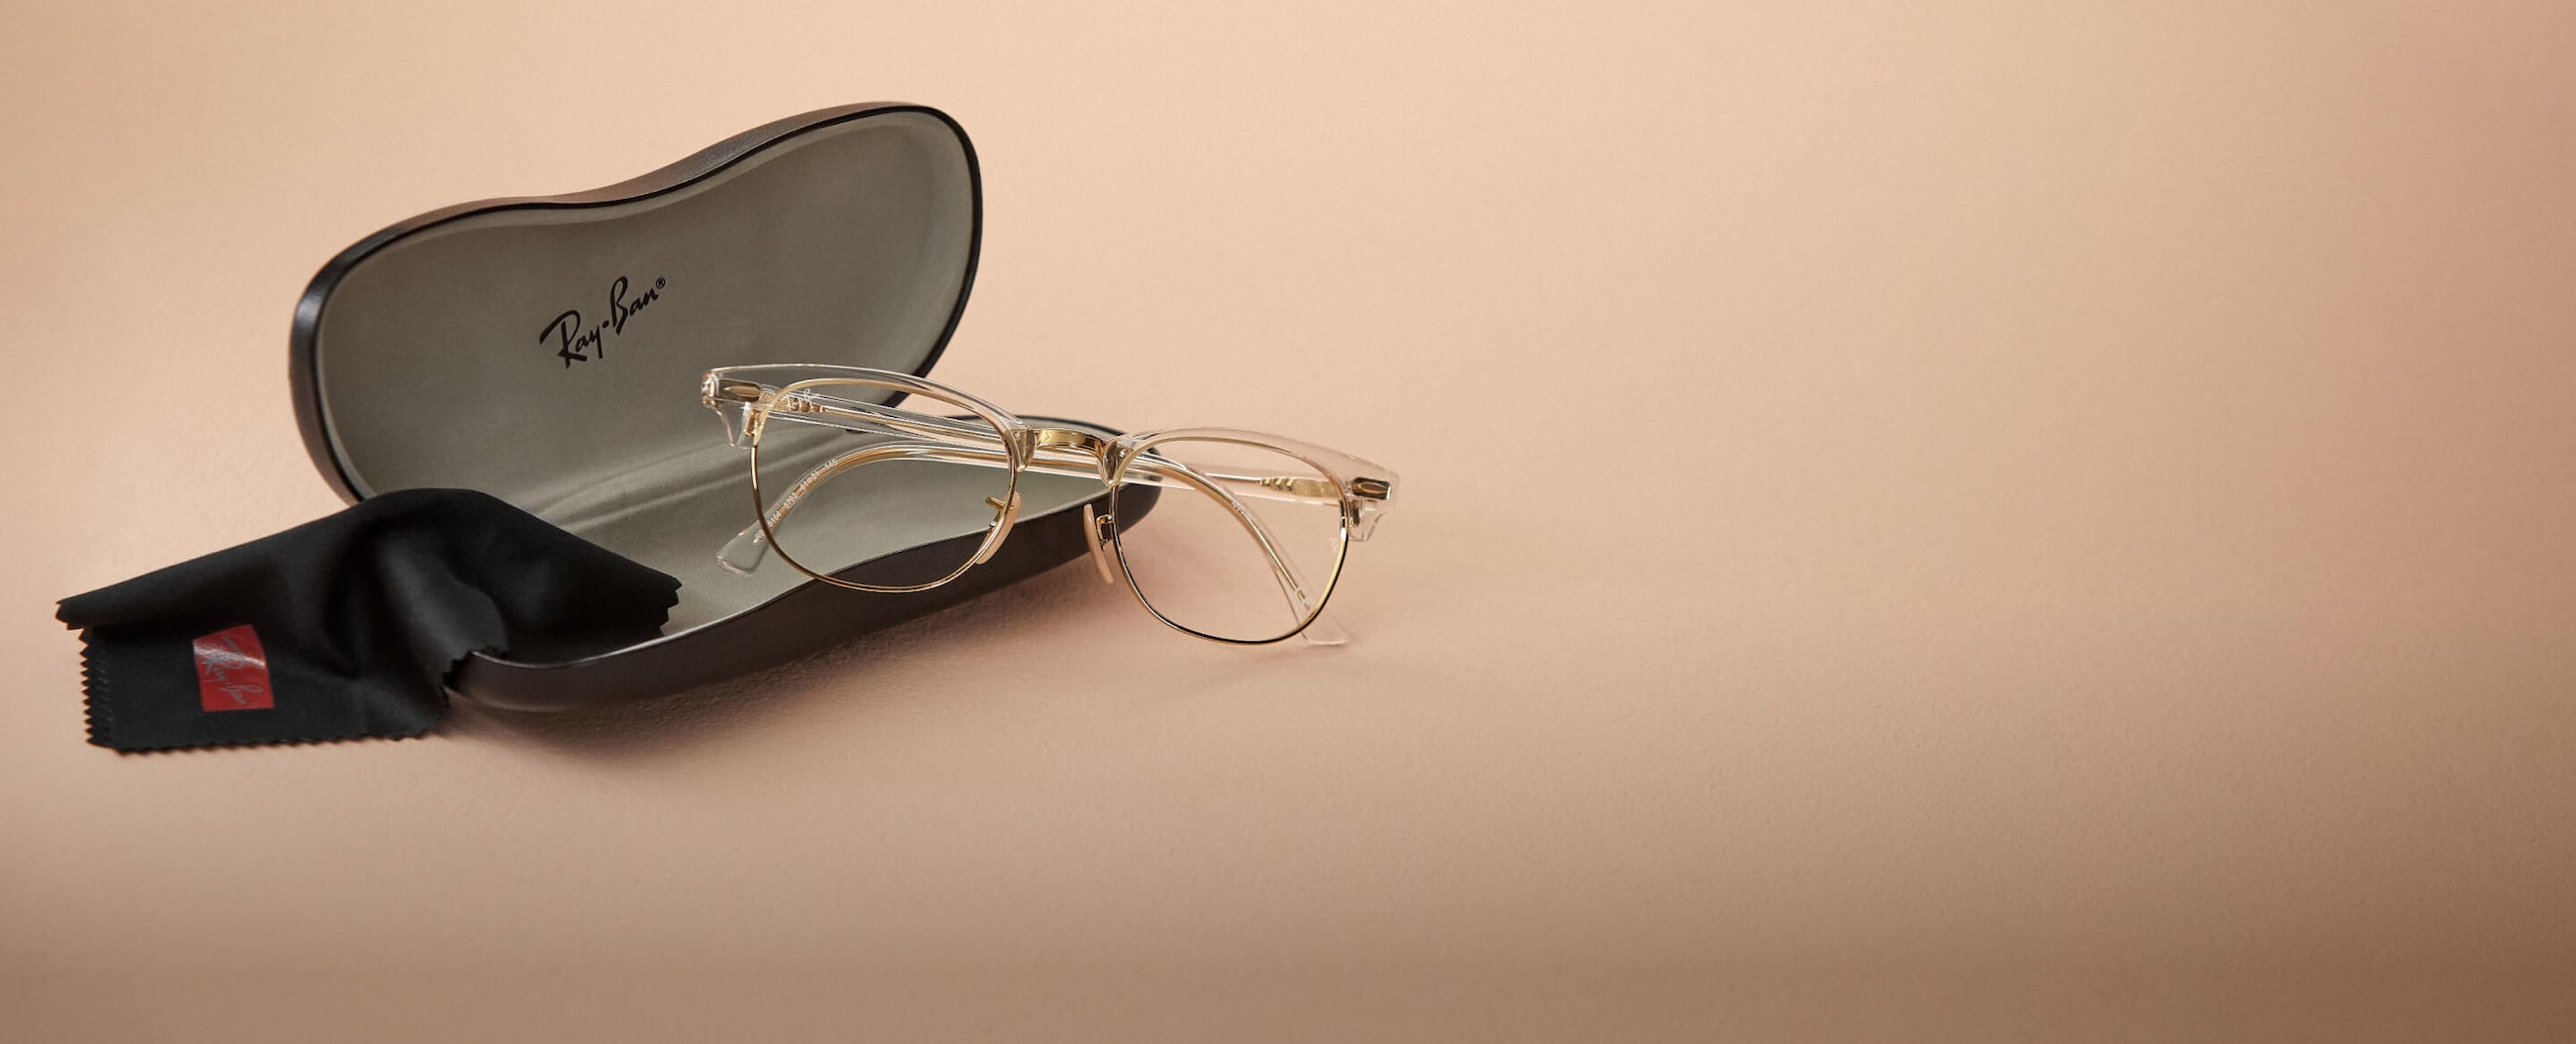 Discover Unique Prescription Eyeglasses at Southern Eyecare Associates